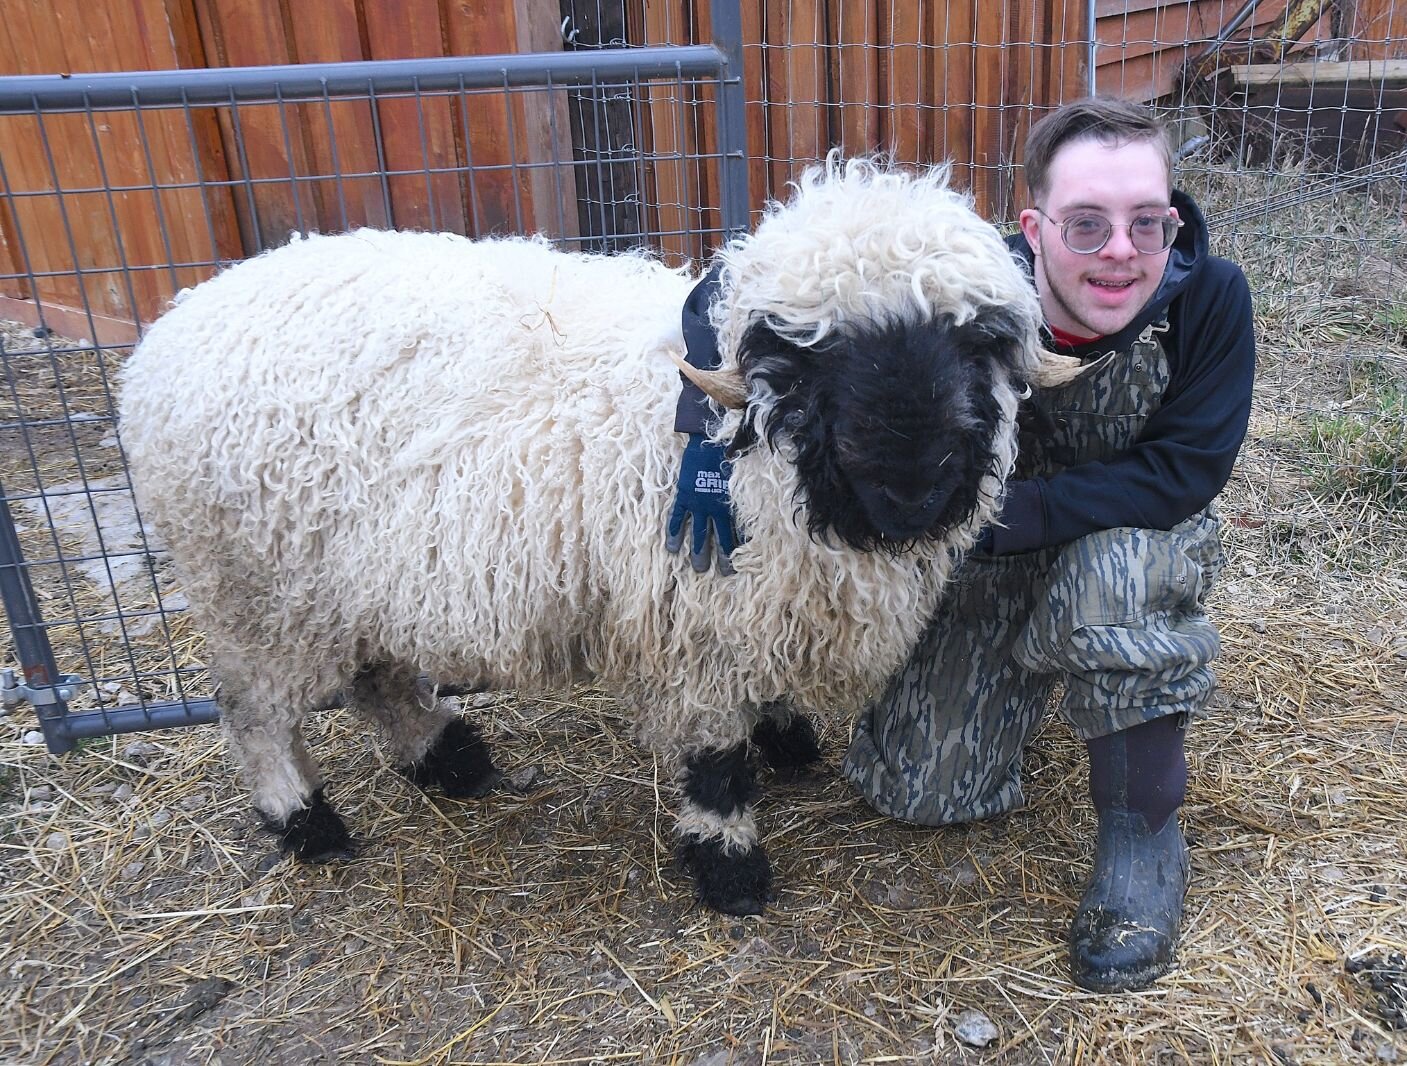 Nate Zebolsky poses with Rambo, a Valais Blacknose sheep, who was a grand champion at last year’s Calhoun County Fair.